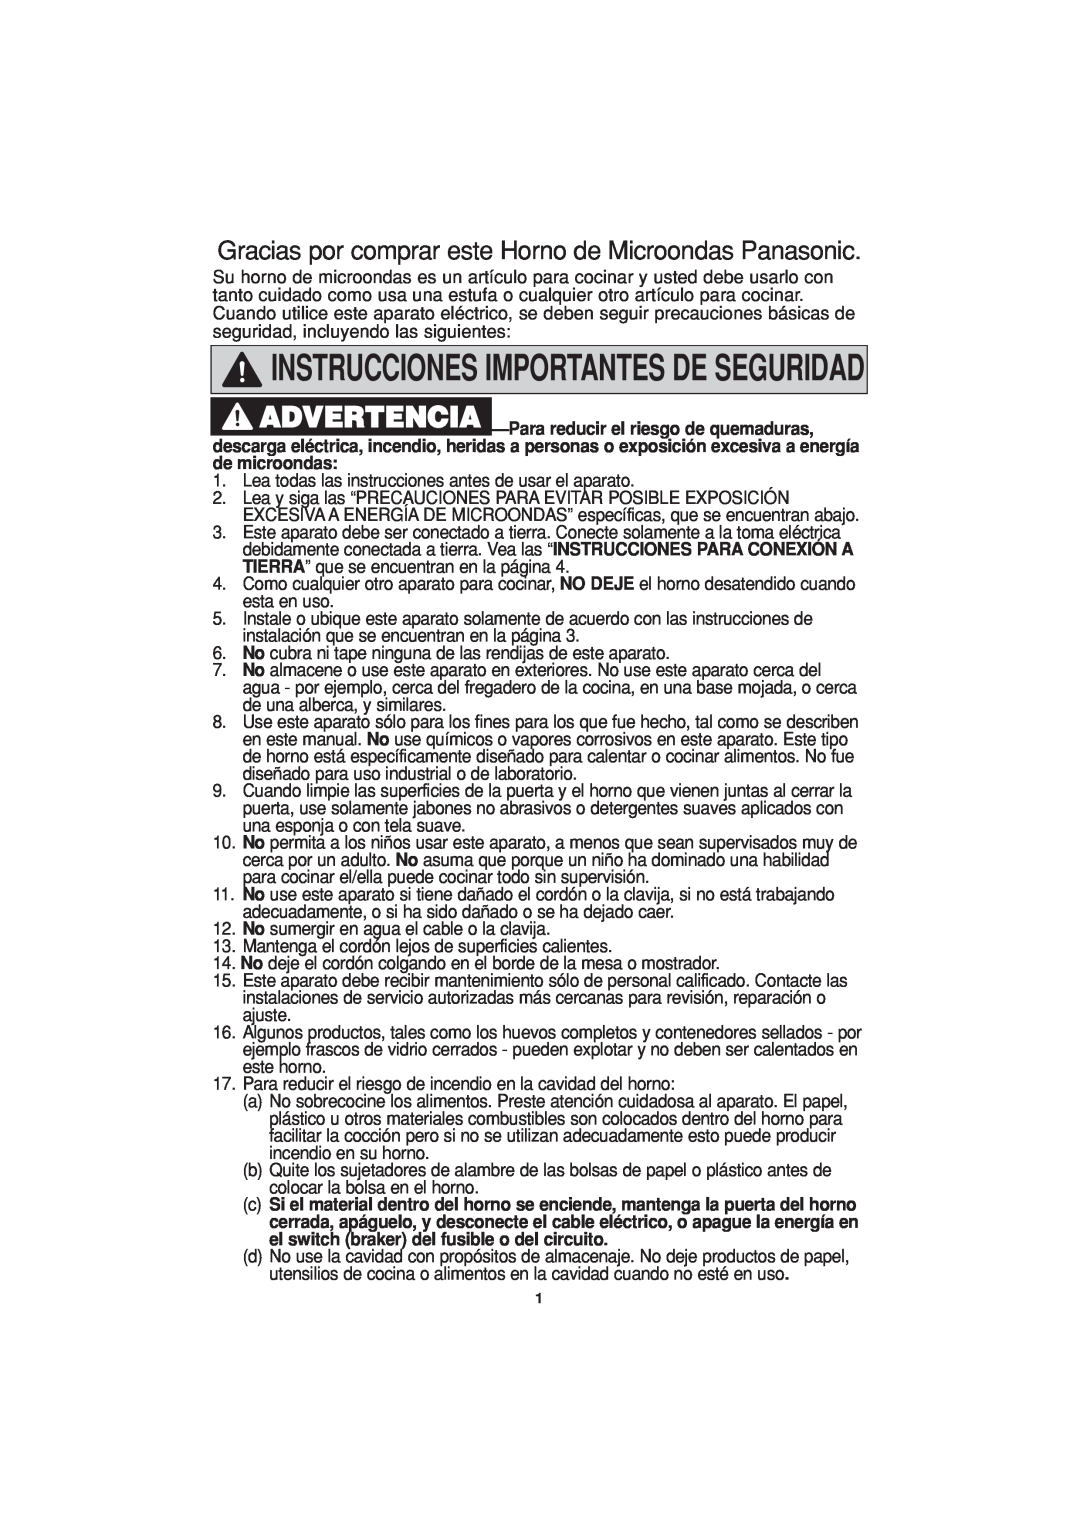 Panasonic NN-H614, NN-H604, NN-H504 important safety instructions Instrucciones Importantes De Seguridad 